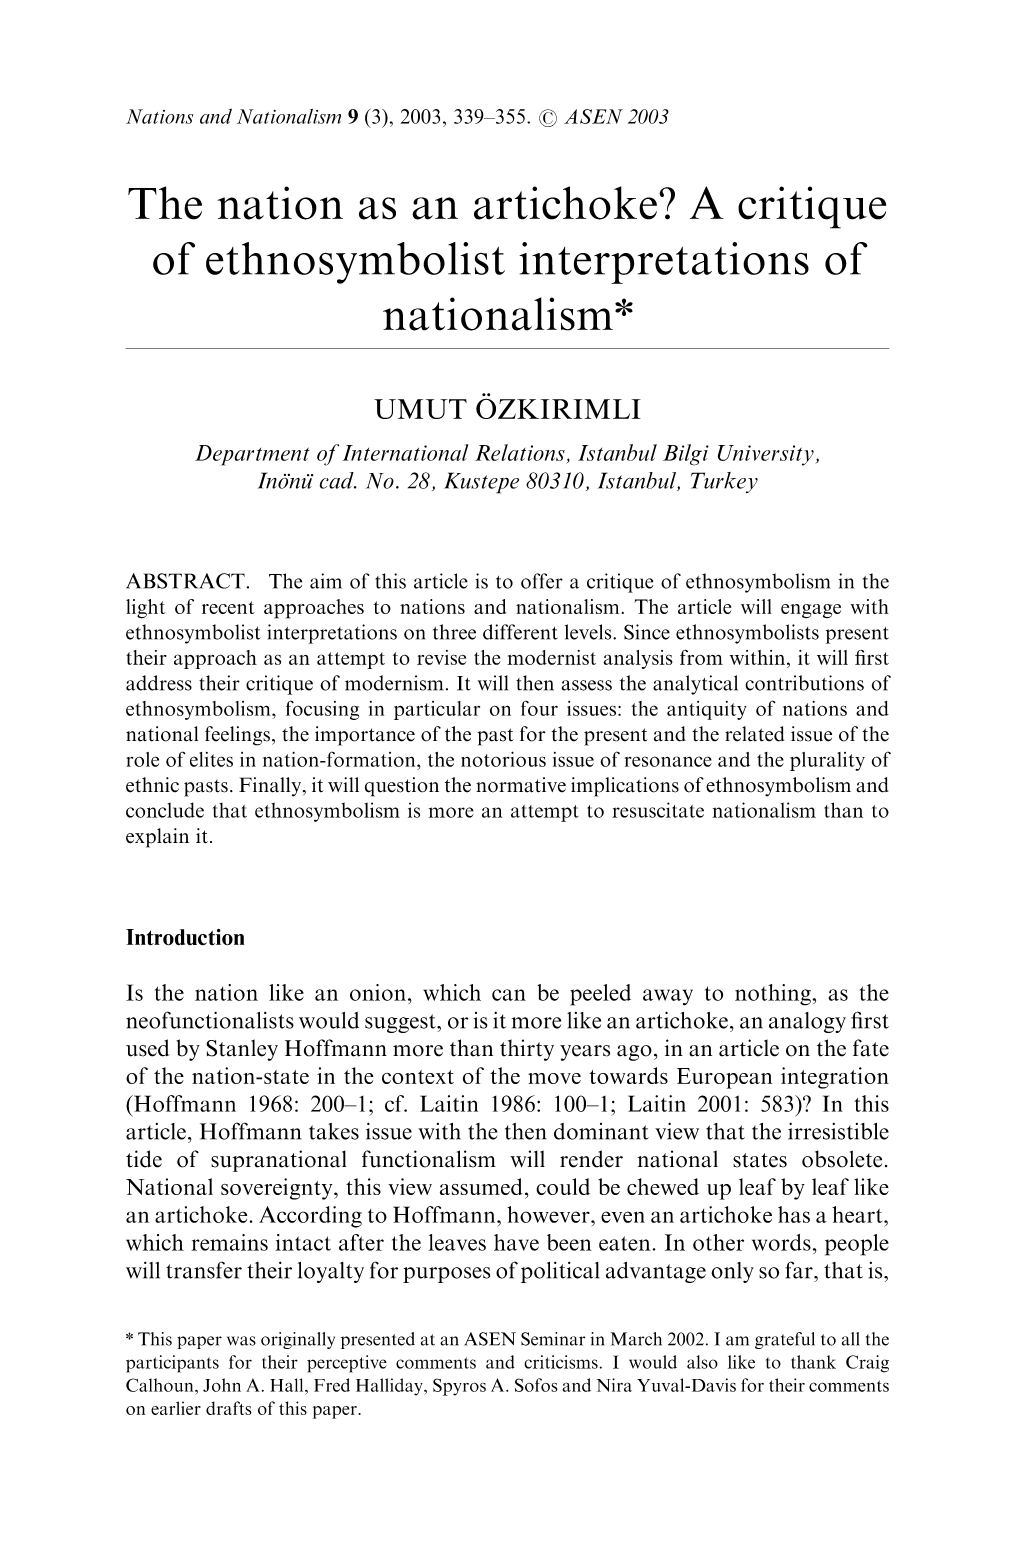 The Nation As an Artichoke? a Critique of Ethnosymbolist Interpretations of Nationalismn